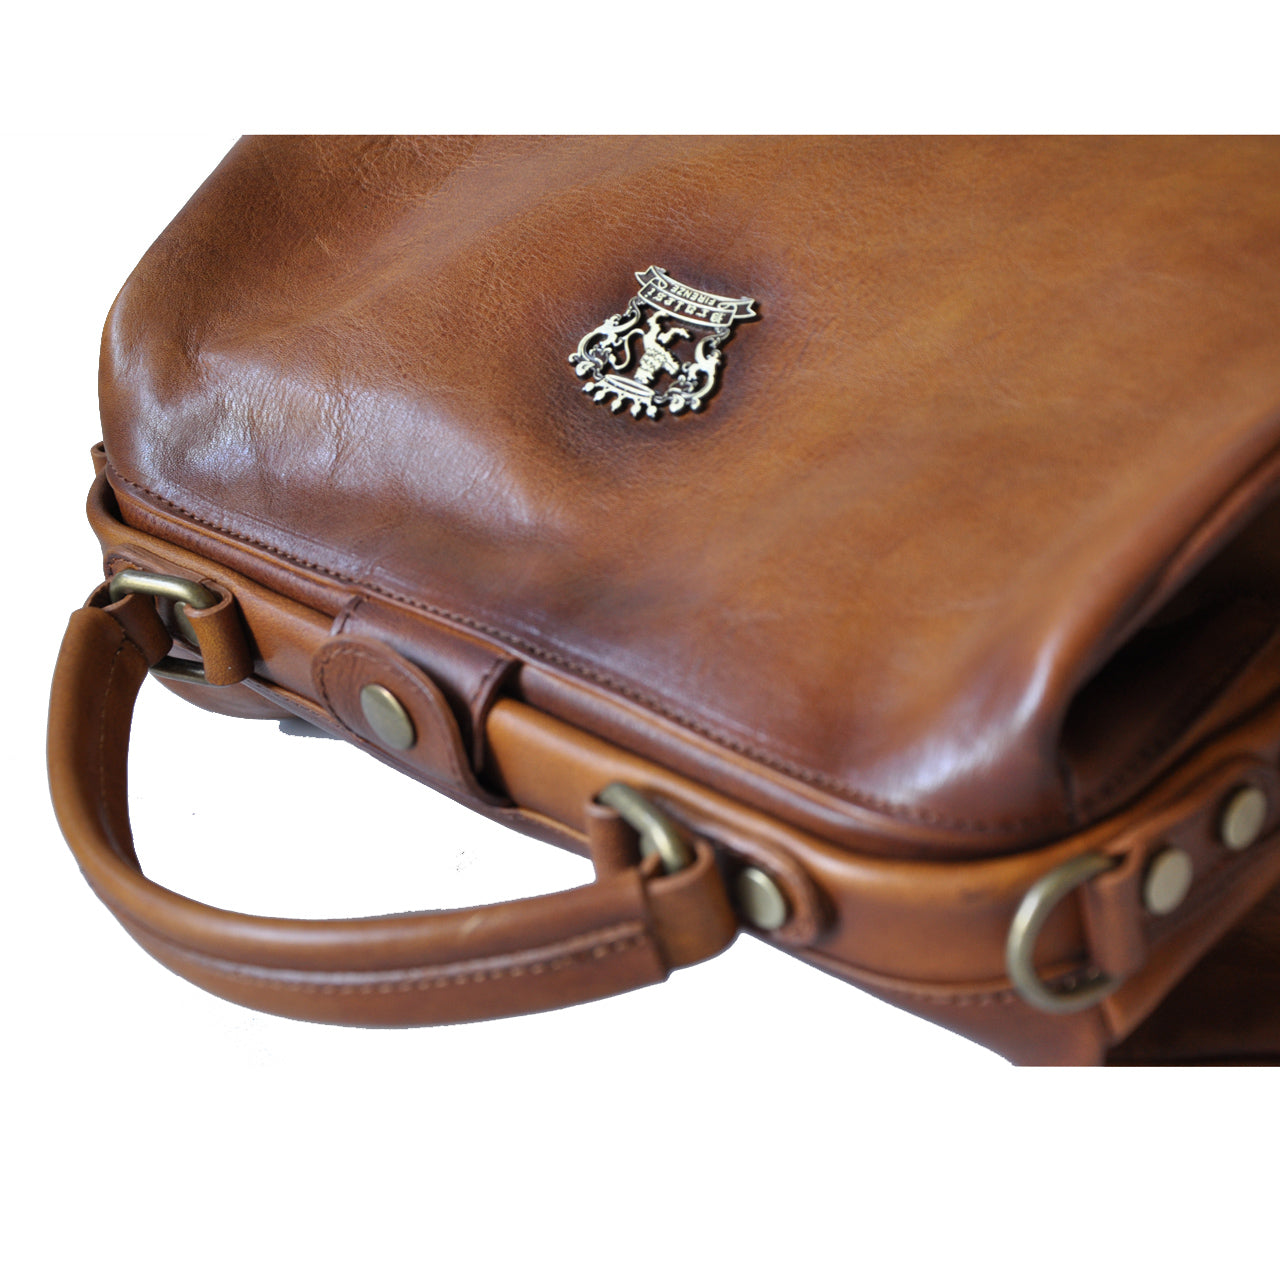 Pratesi Woman Bag Monteriggioni in genuine Italian leather - Vegetable Tanned Italian Leather Cognac